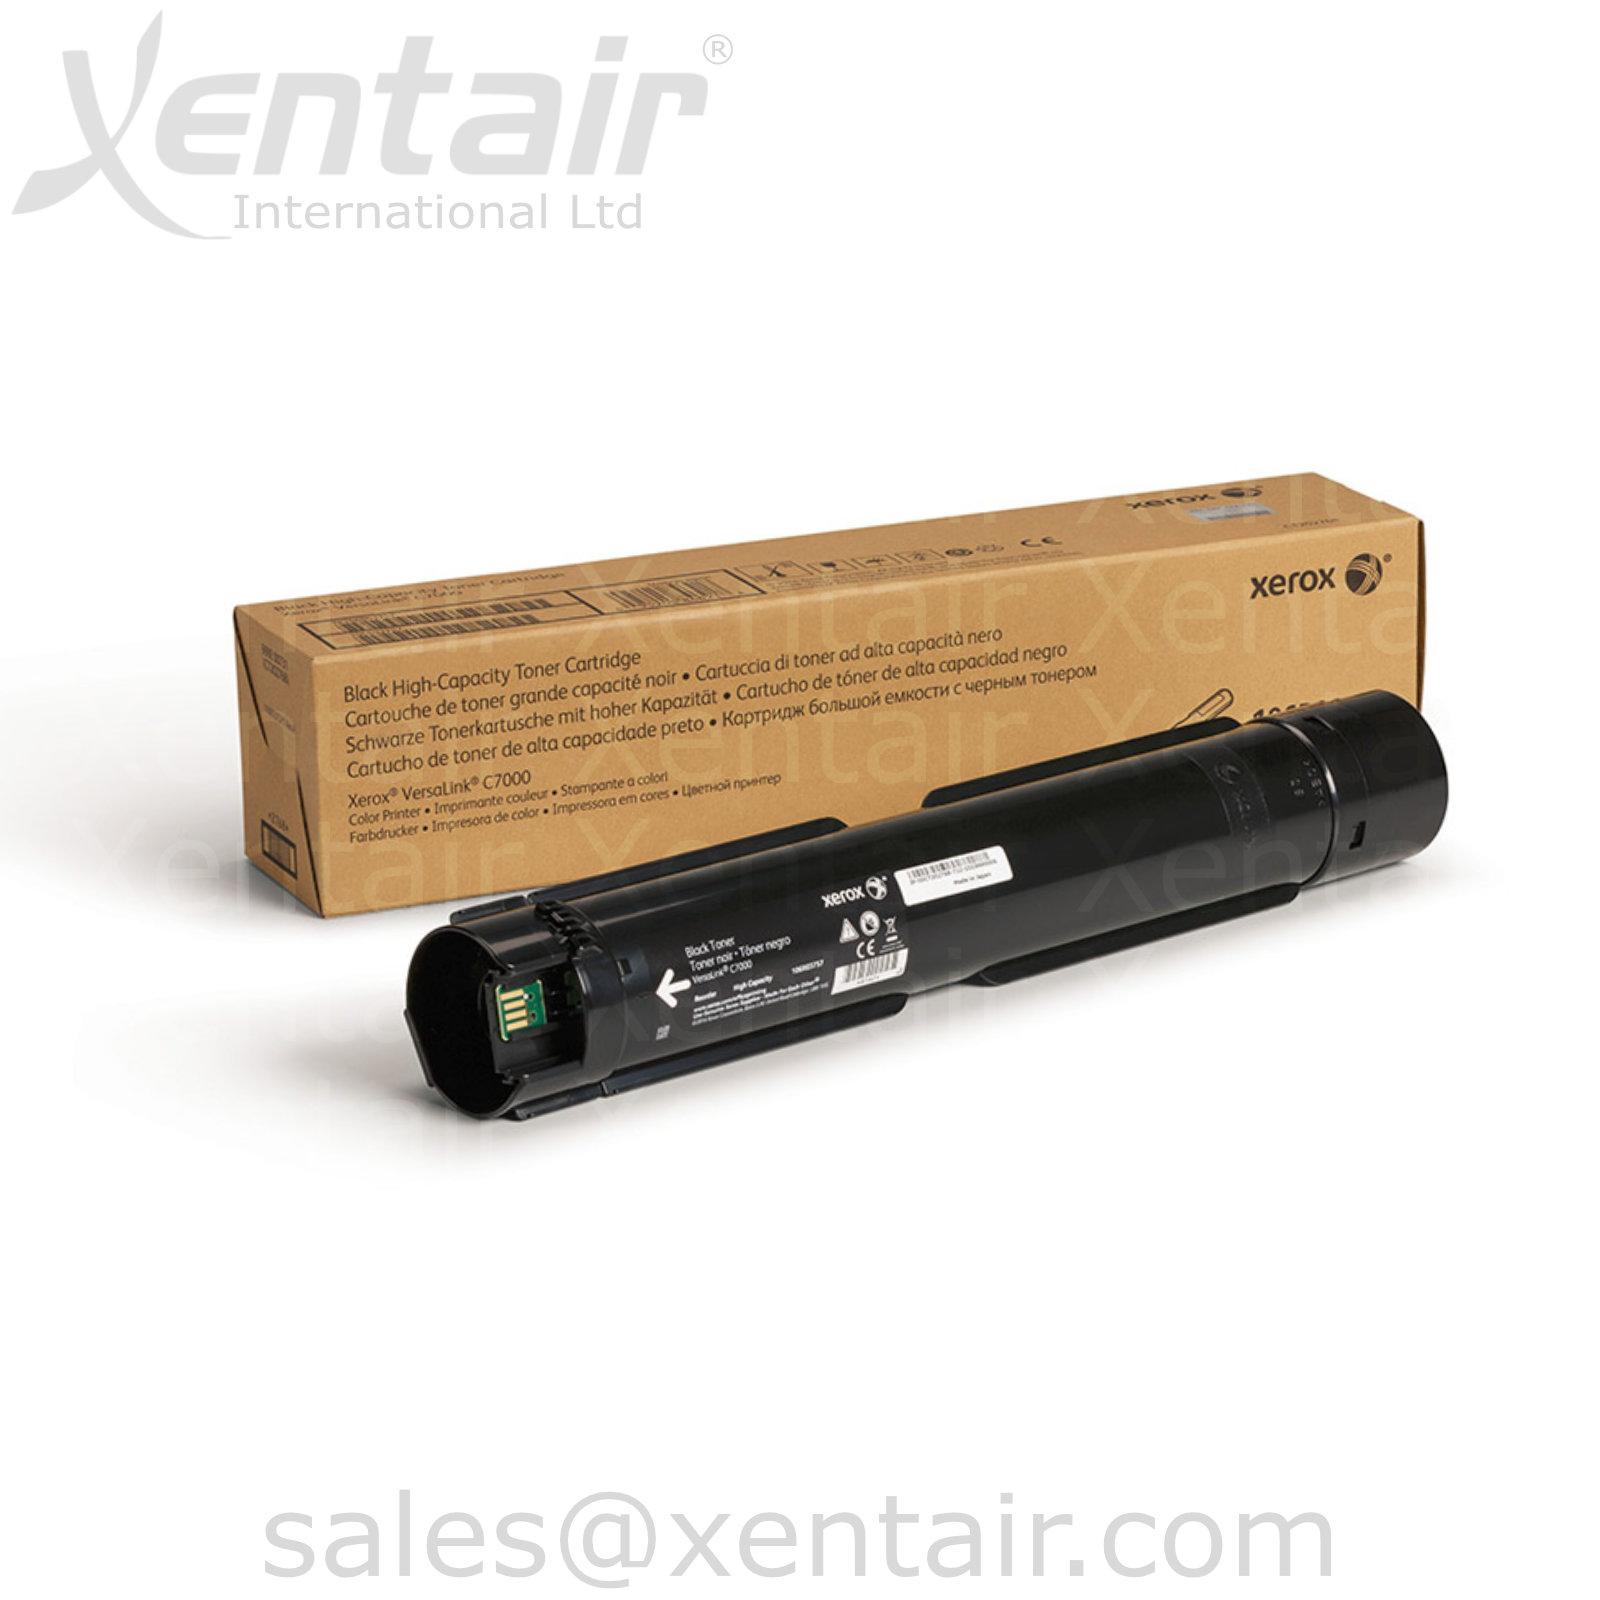 Xerox® VersaLink® C7000 Black High Capacity Toner Cartridge 106R03757